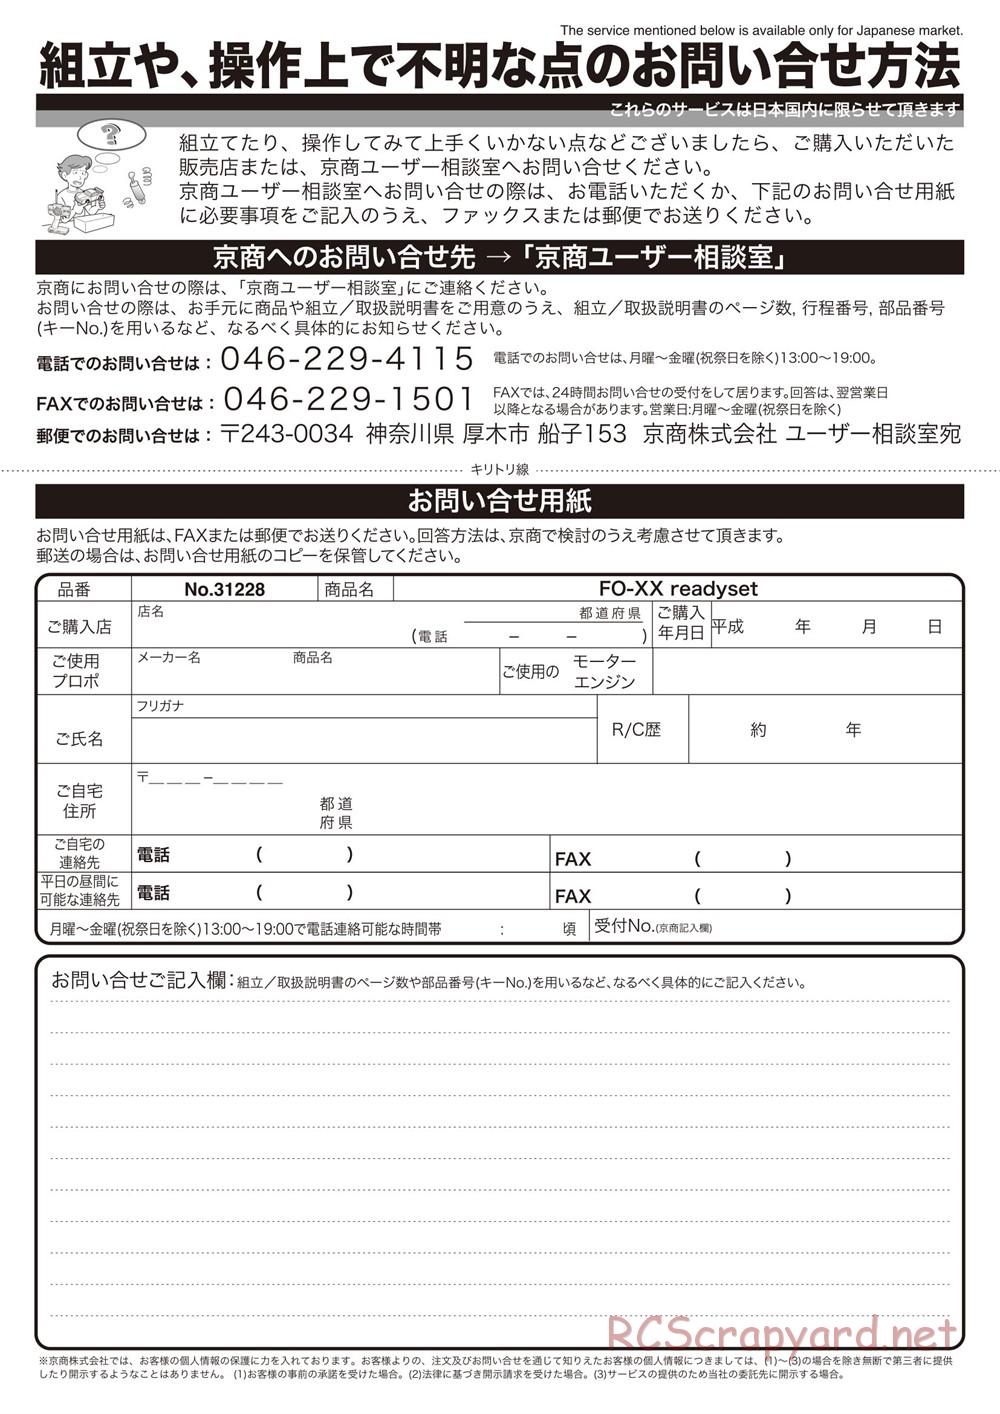 Kyosho - FO-XX GP - Manual - Page 46